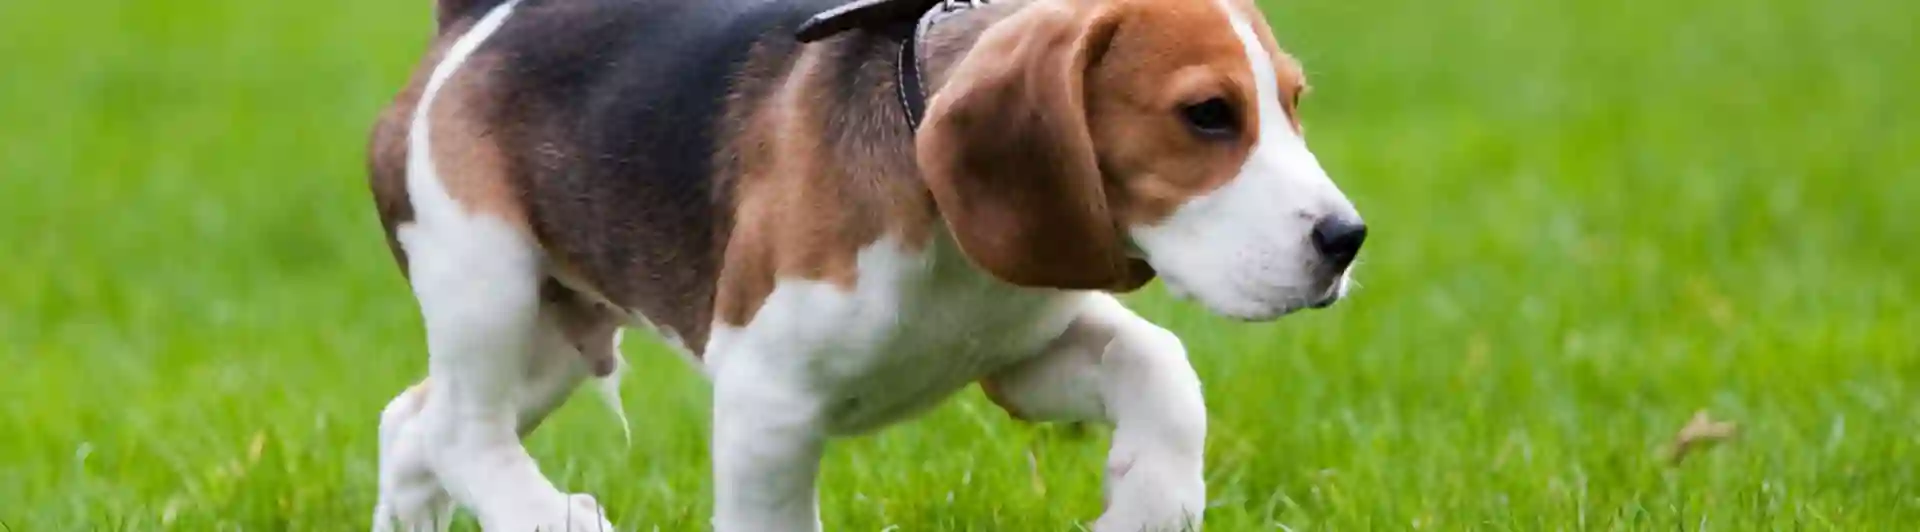 Beaglevalp smyger i gräset